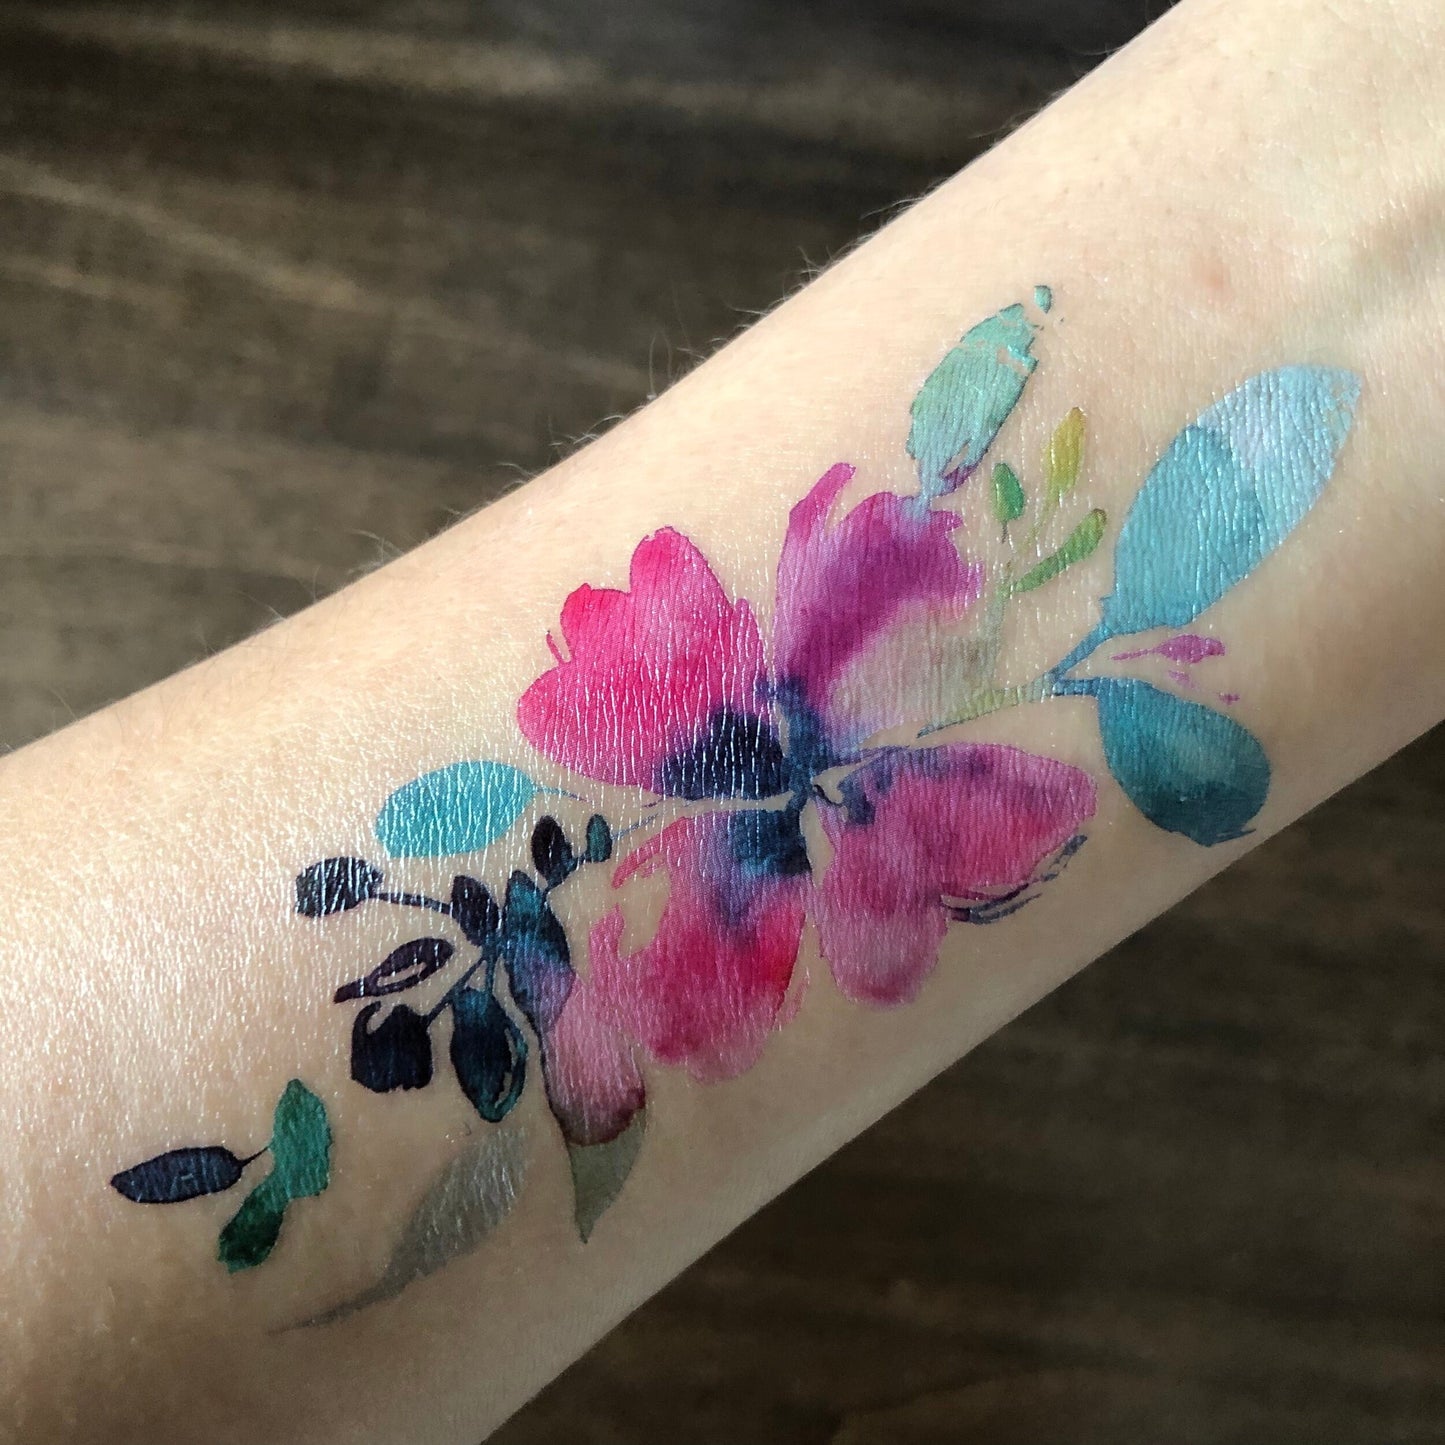 Tattly Nearly 4" Watercolor Rose Temporary Tattoo - Single Floral Temp Tattoo